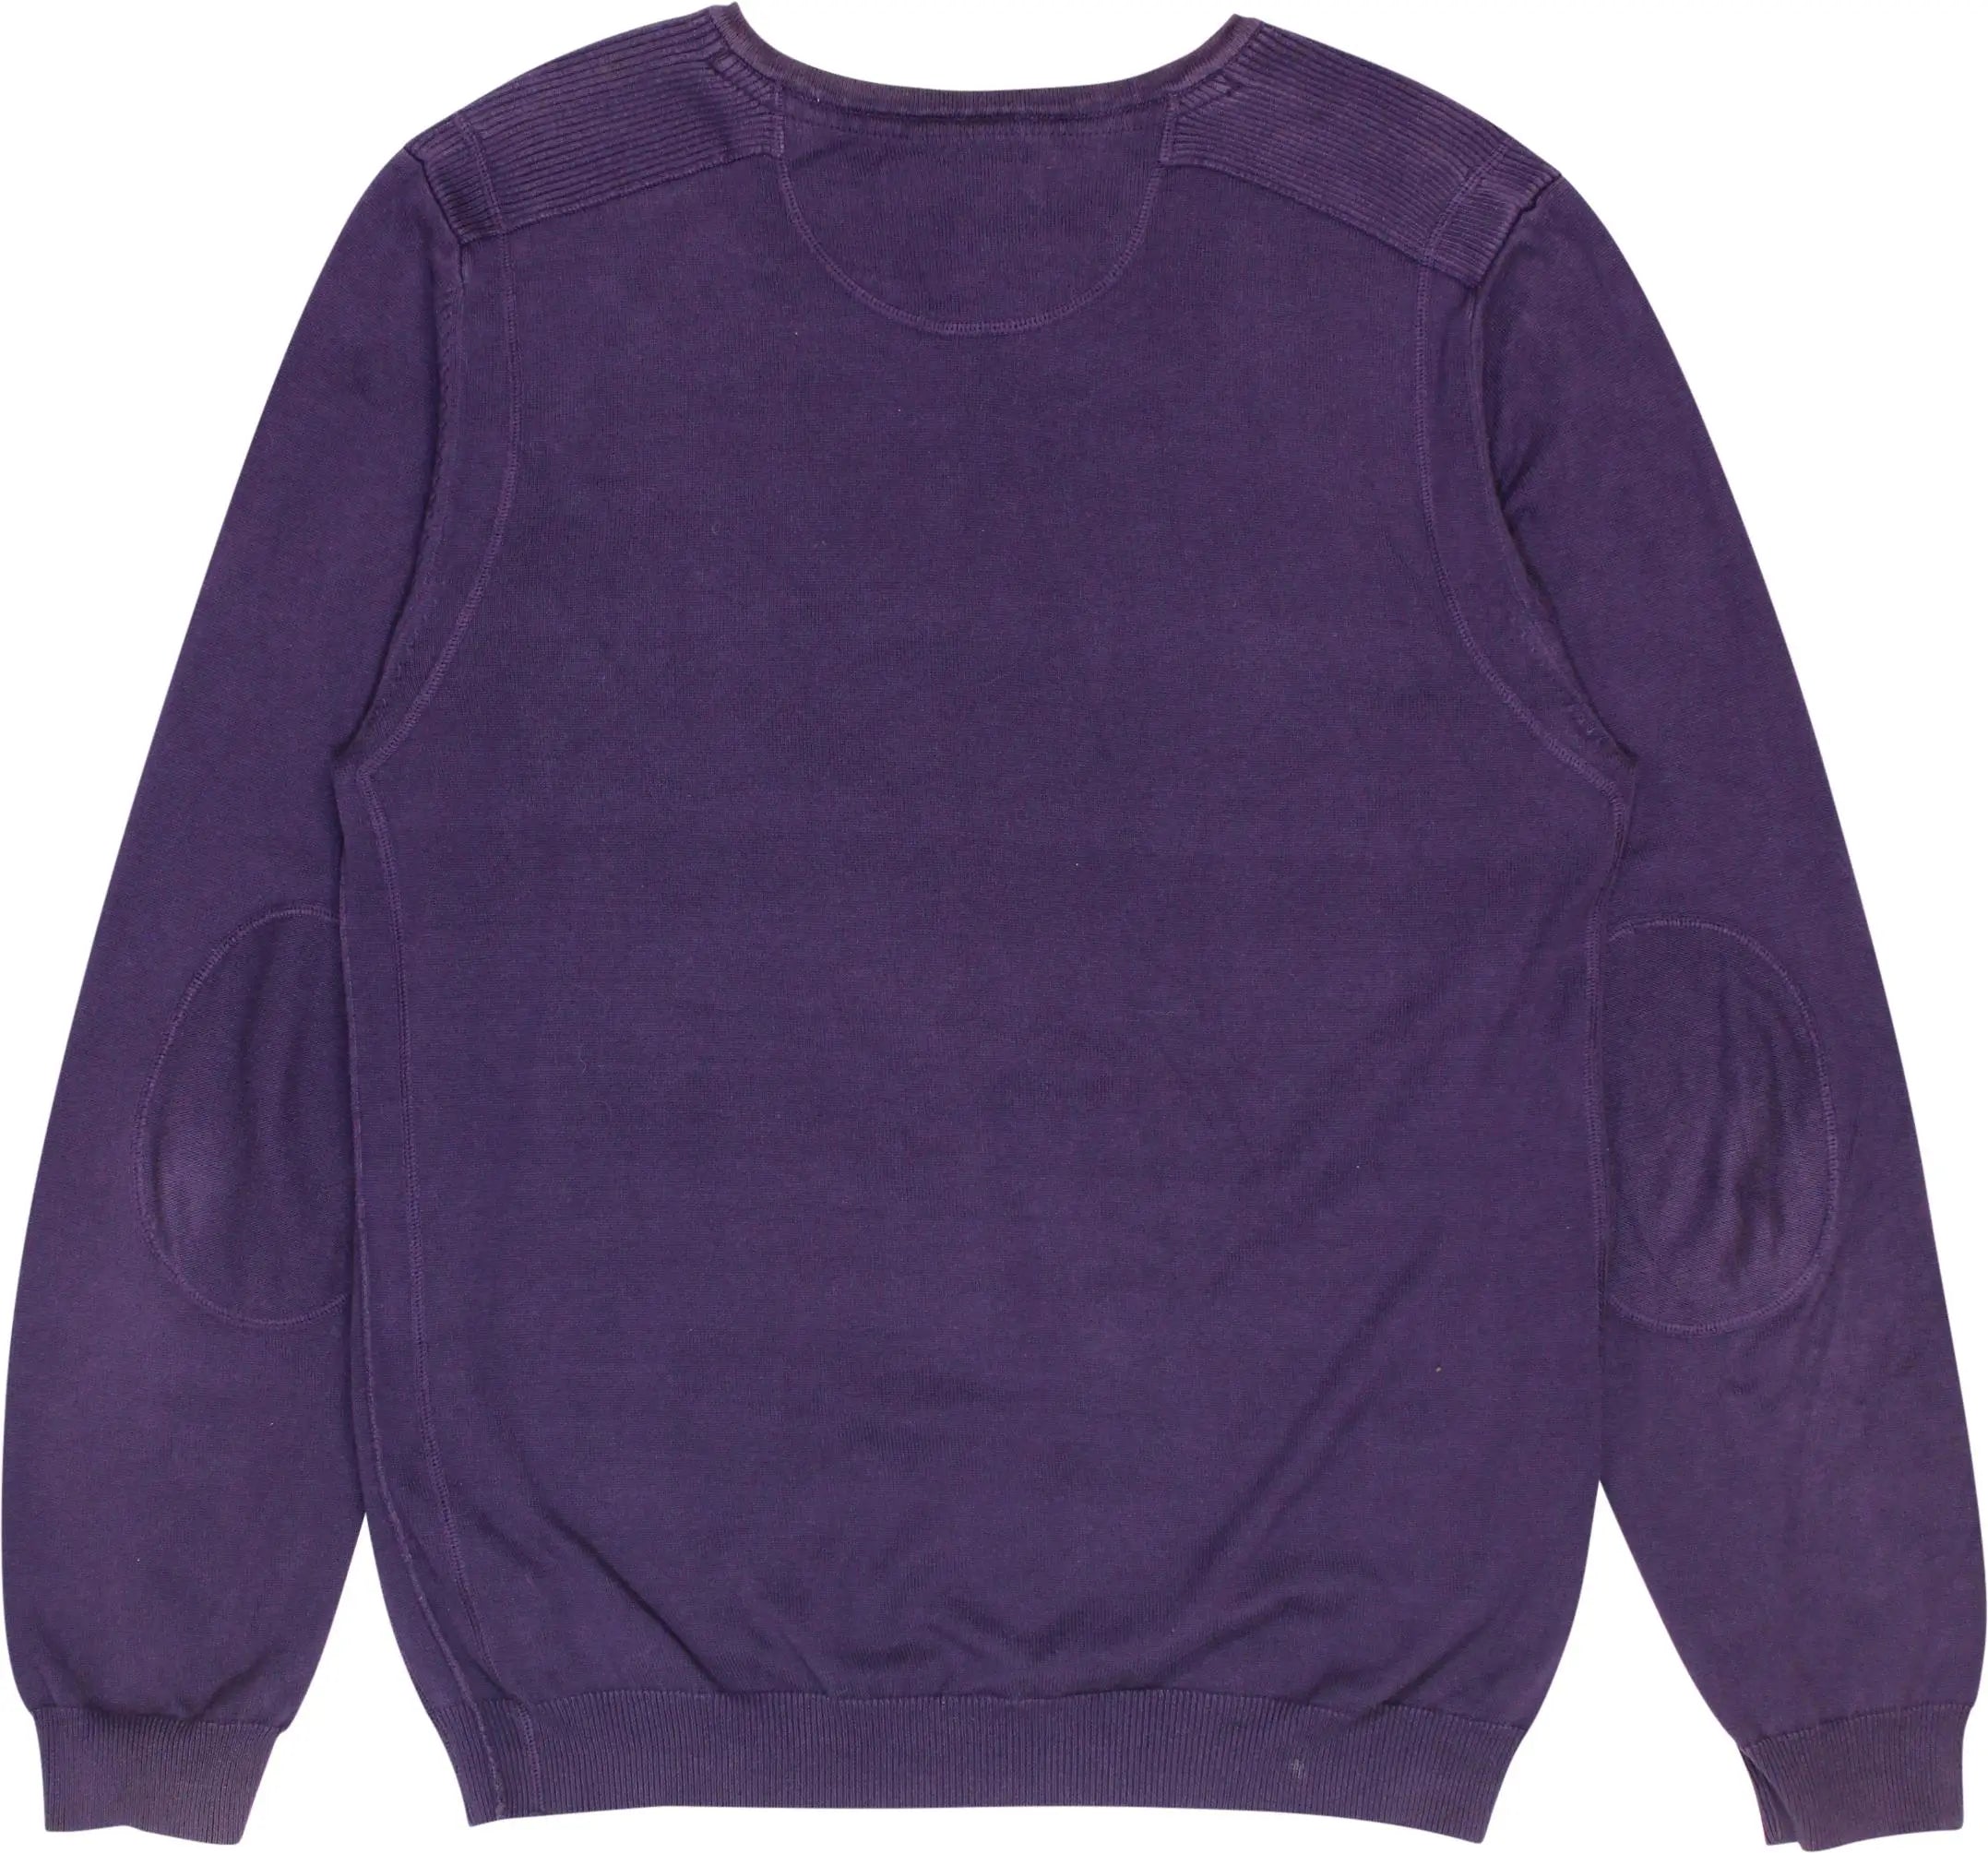 Esprit - Purple Quarter Neck Jumper- ThriftTale.com - Vintage and second handclothing